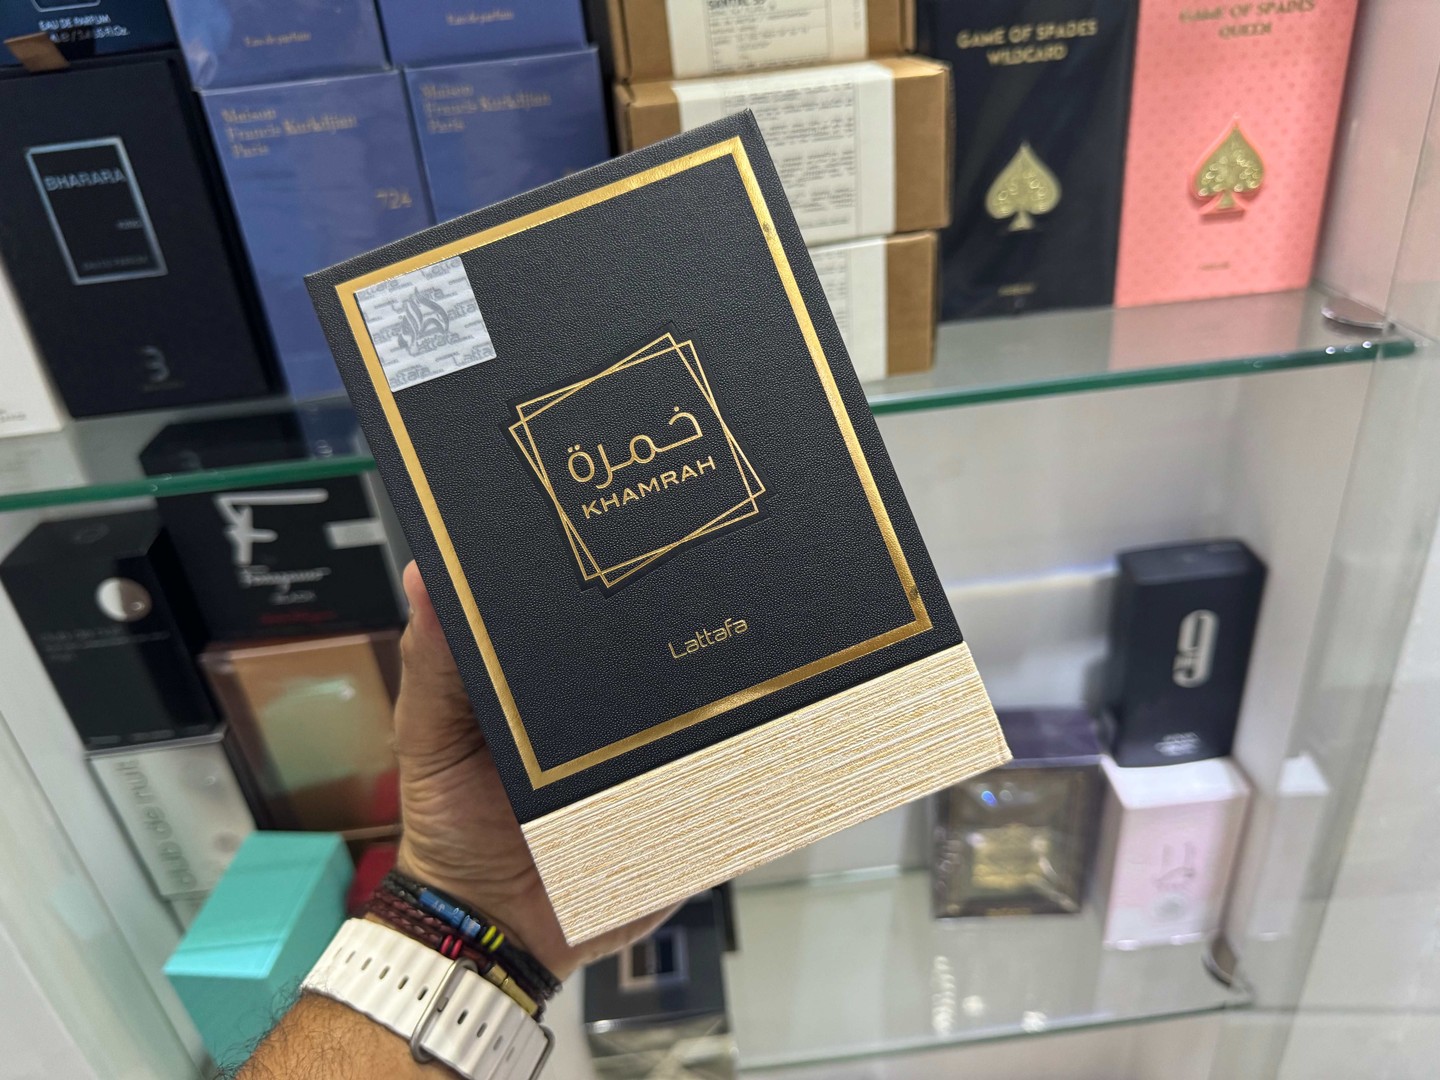 joyas, relojes y accesorios - Perfume KHAMRAH Lattafa 100ML o 3.4OZFL Nuevo, Original , RD$ 4,500 NEG 0